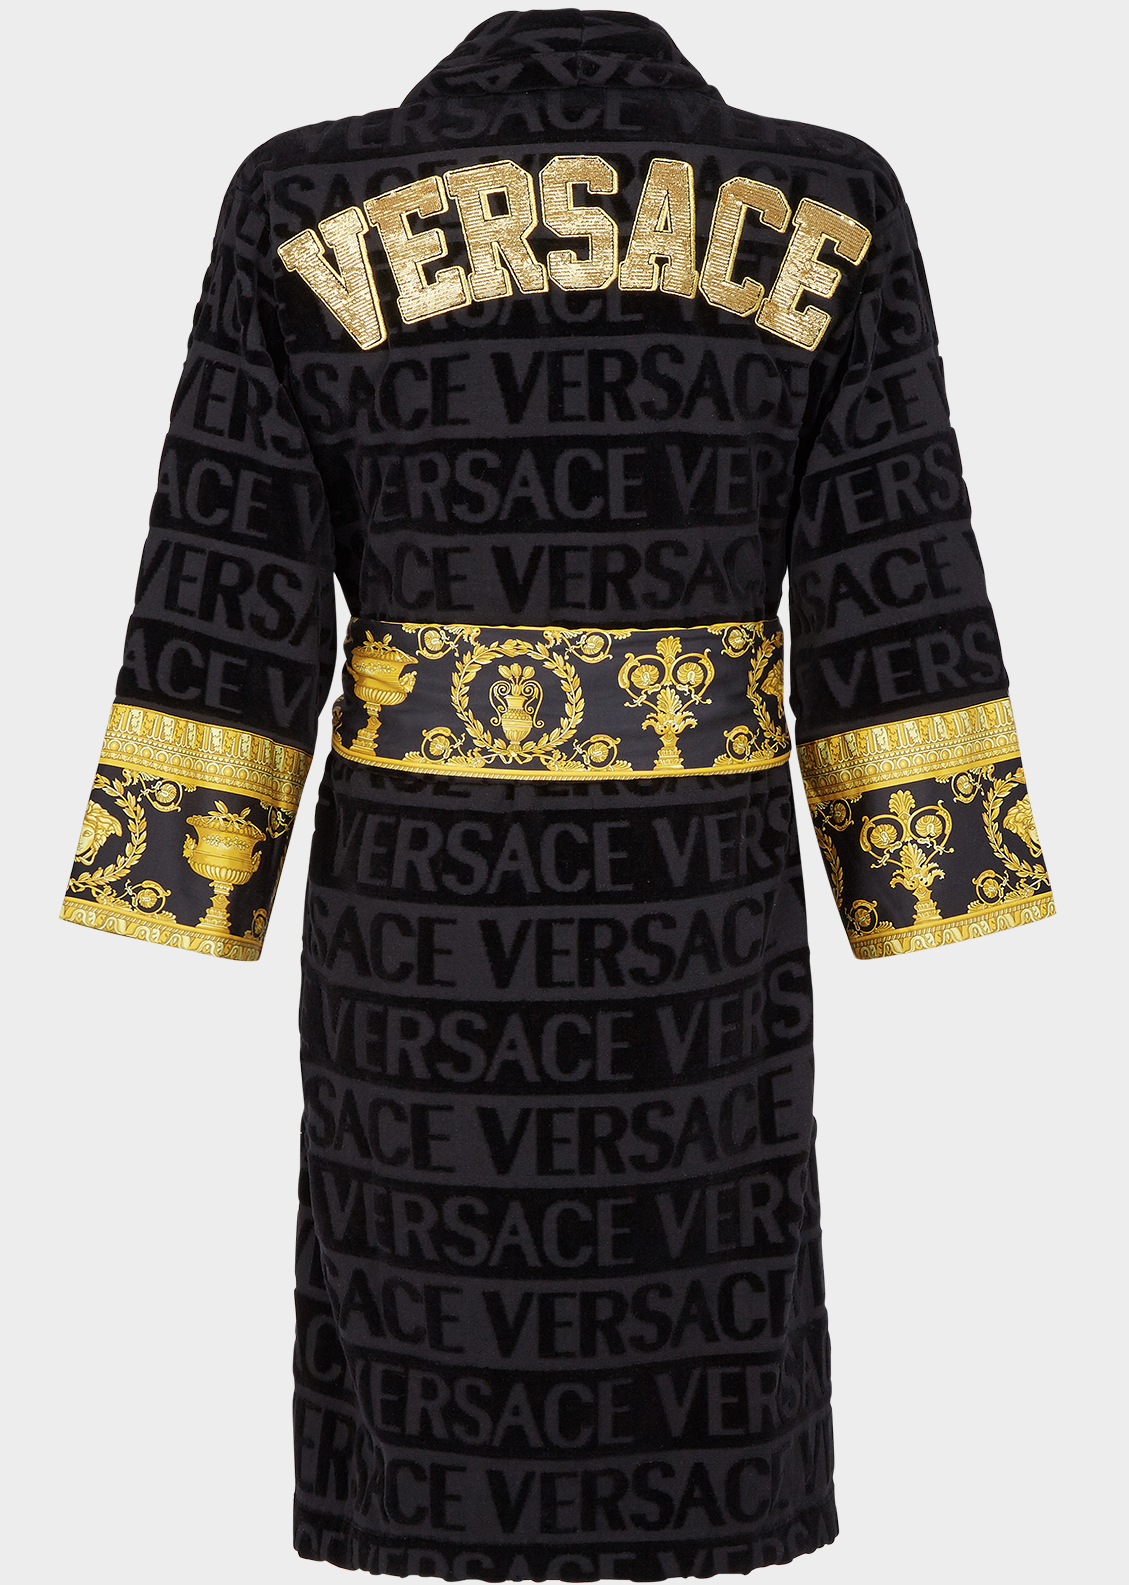 versace bathrobe mens